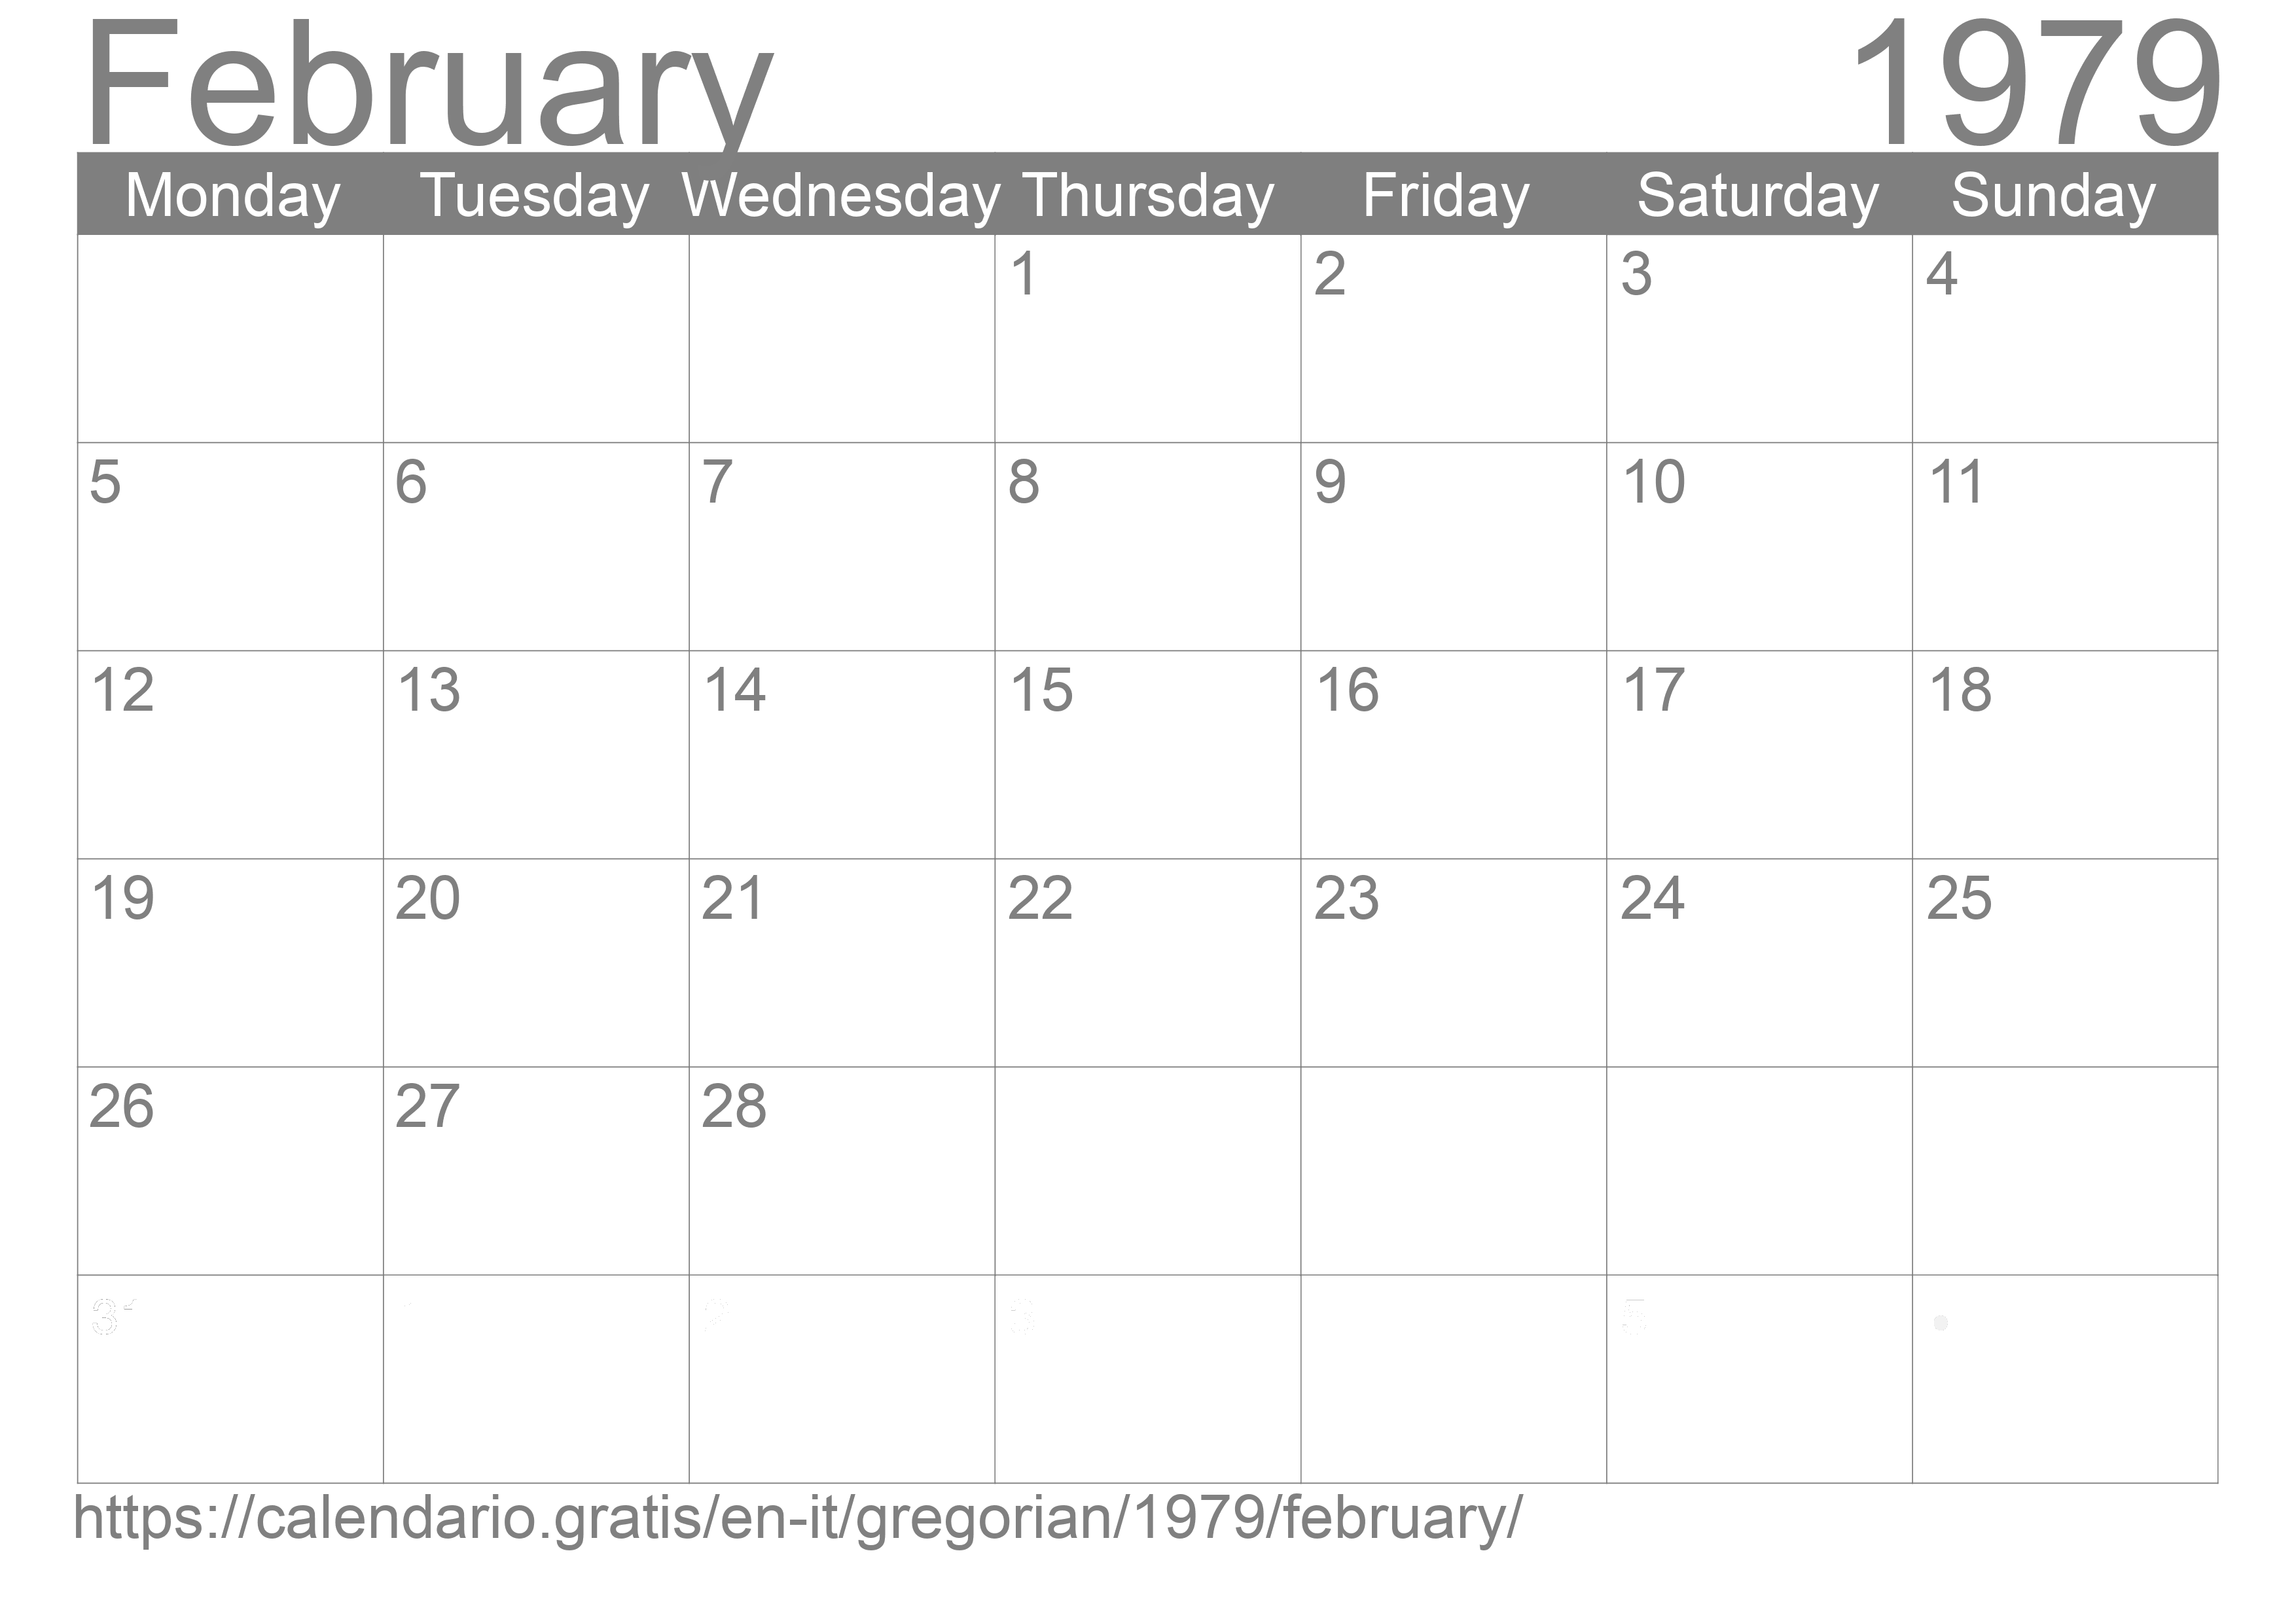 Calendar February 1979 to print